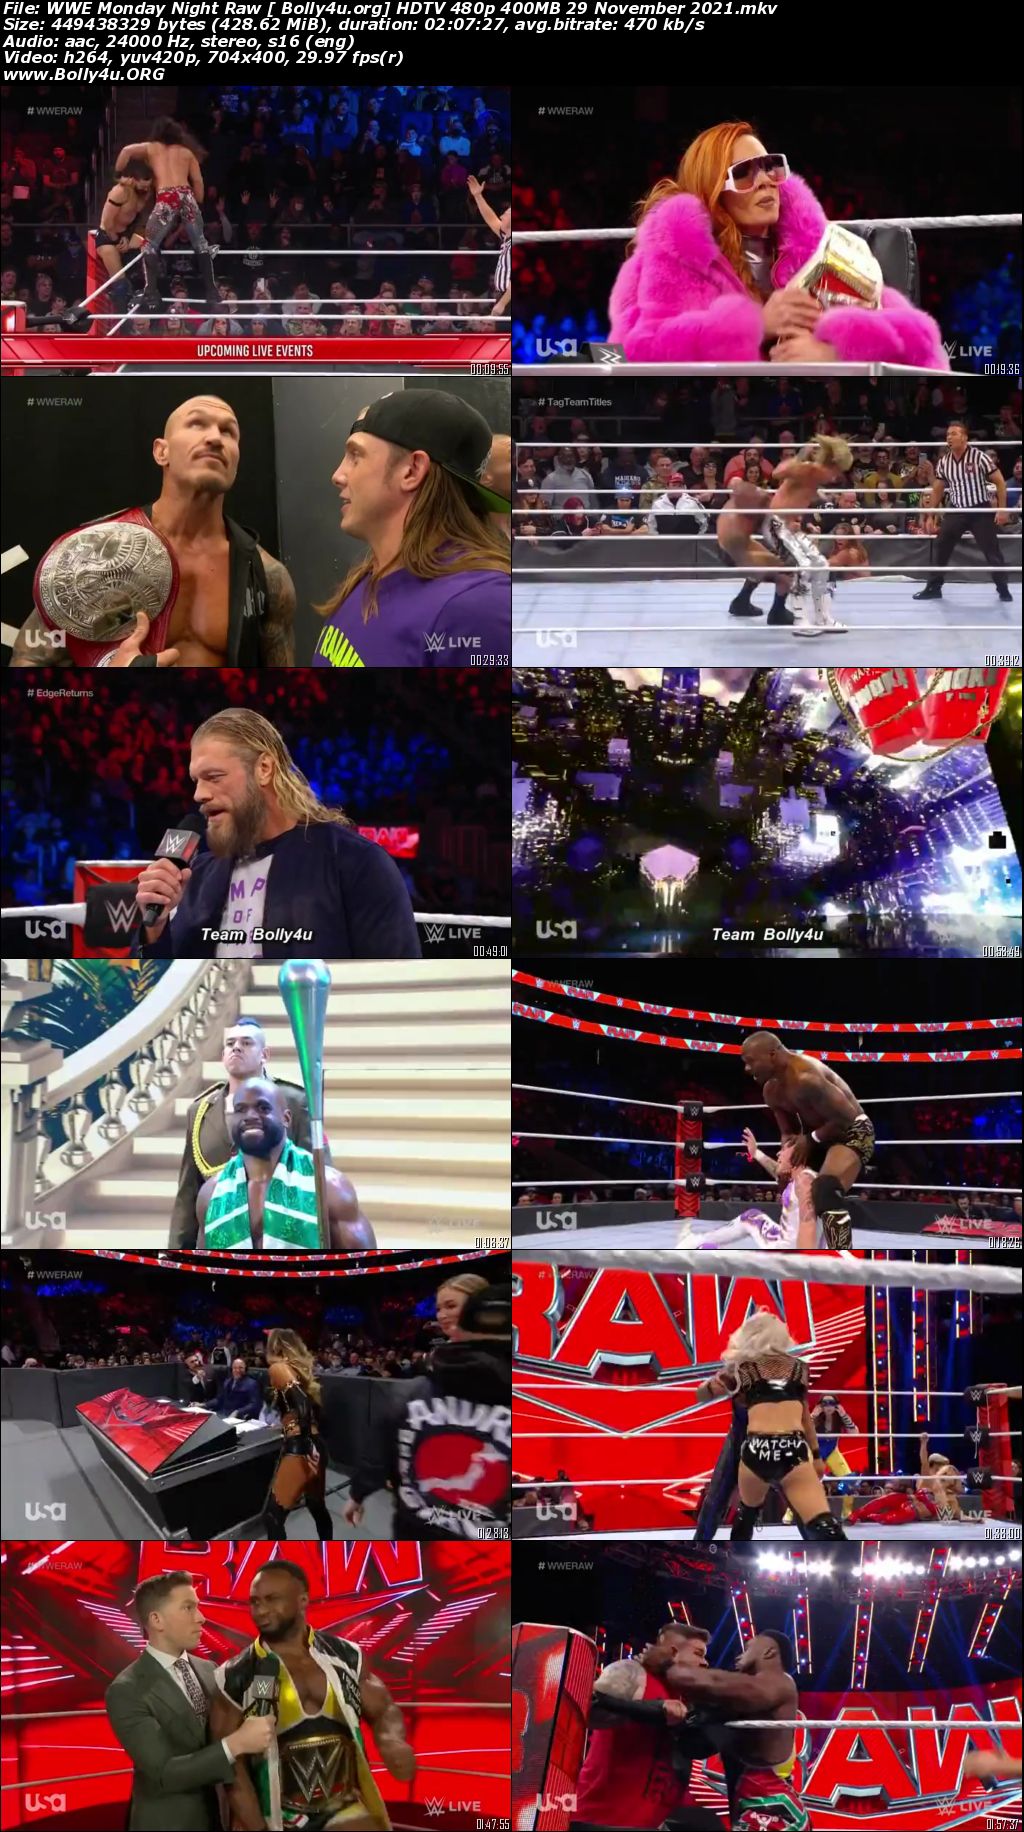 WWE Monday Night Raw HDTV 480p 400MB 29 November 2021 Download